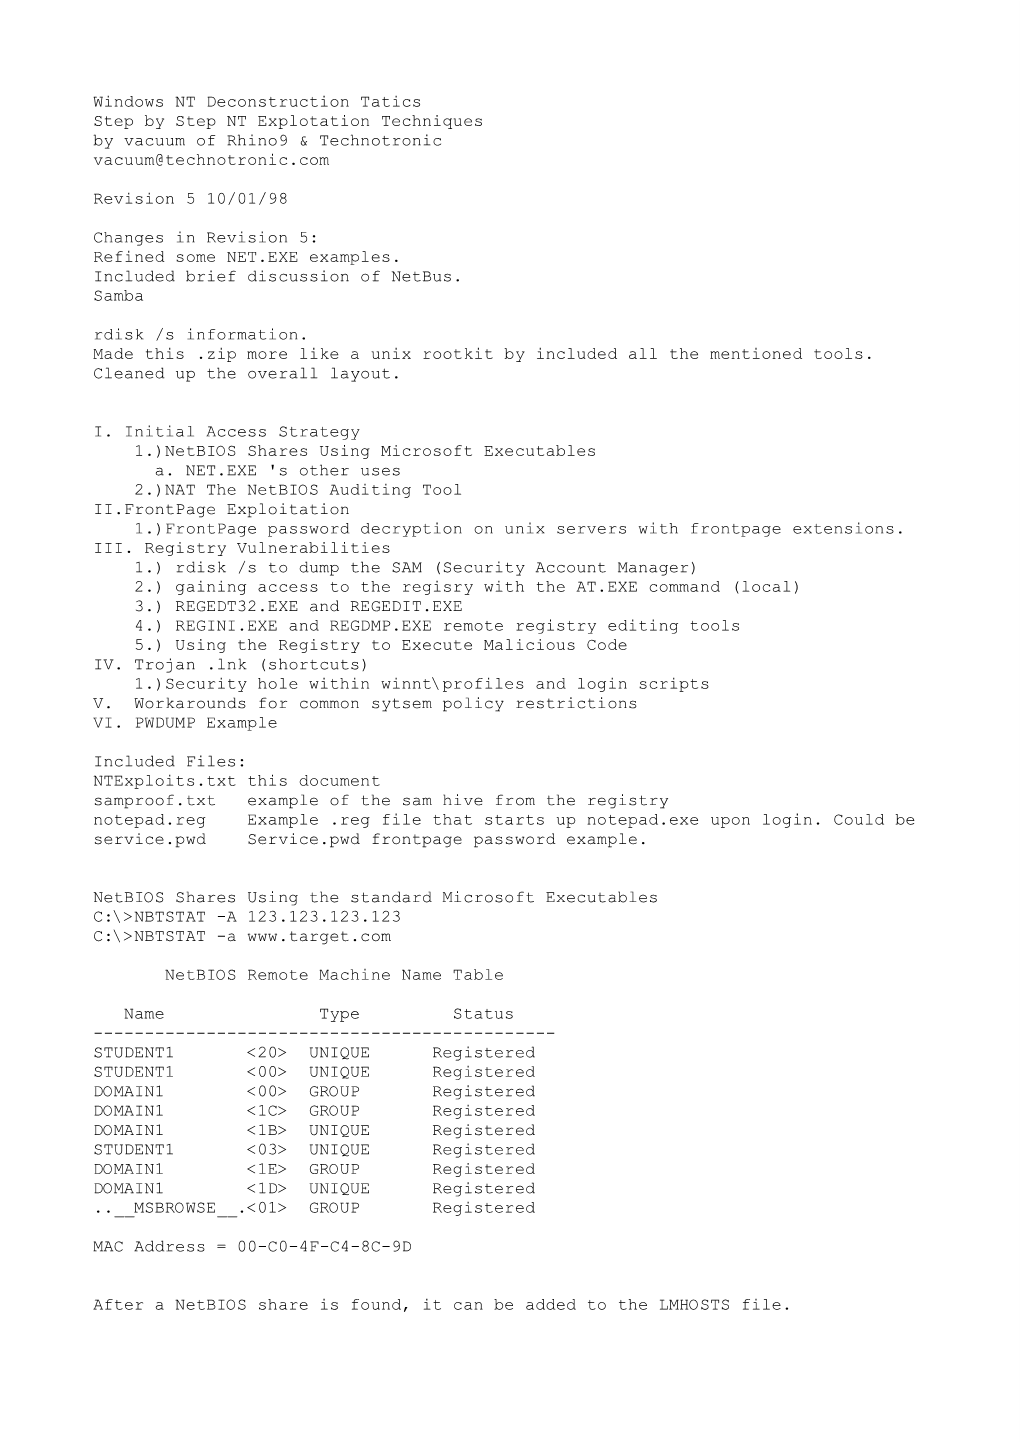 Windows NT Deconstruction Tatics Step by Step NT Explotation Techniques by Vacuum of Rhino9 & Technotronic Vacuum@Technotronic.Com